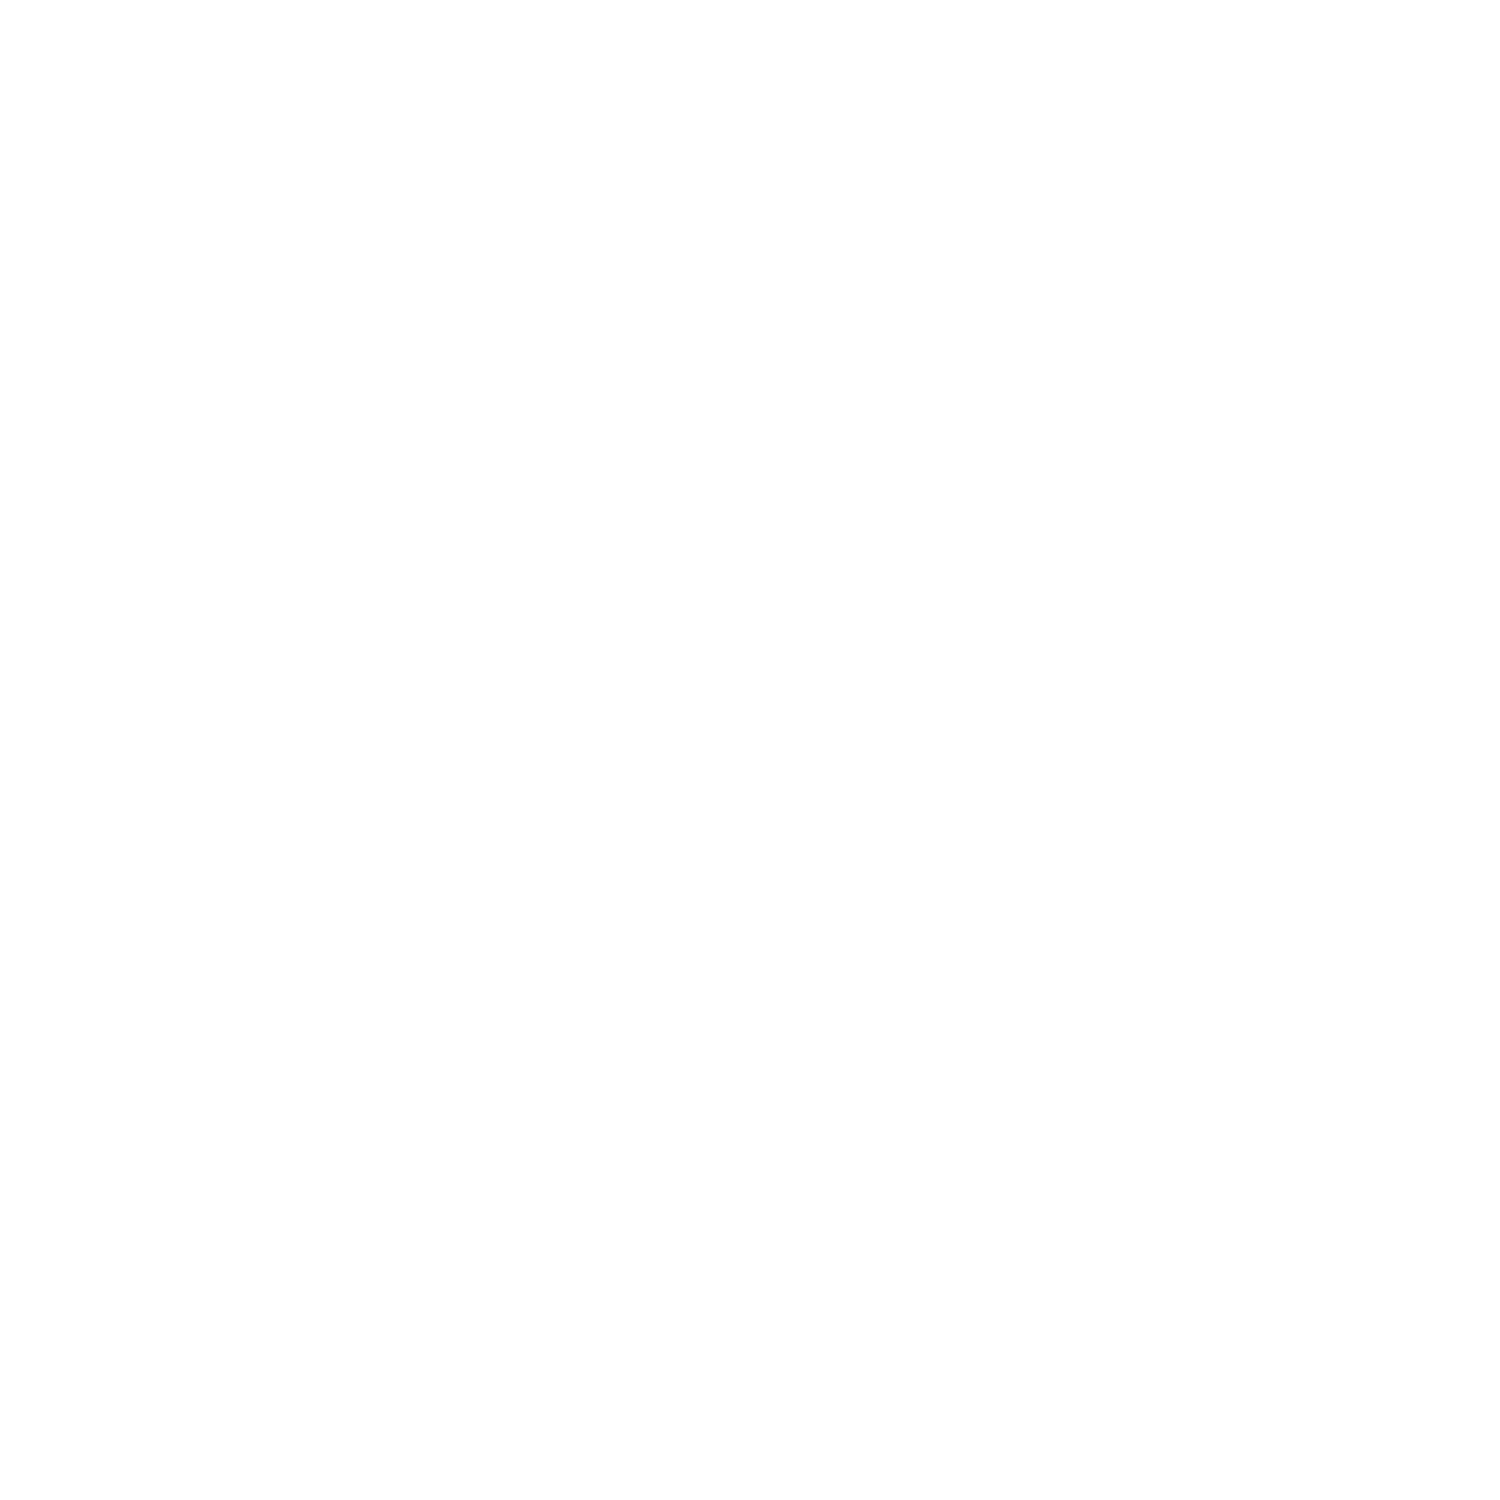 David Dias